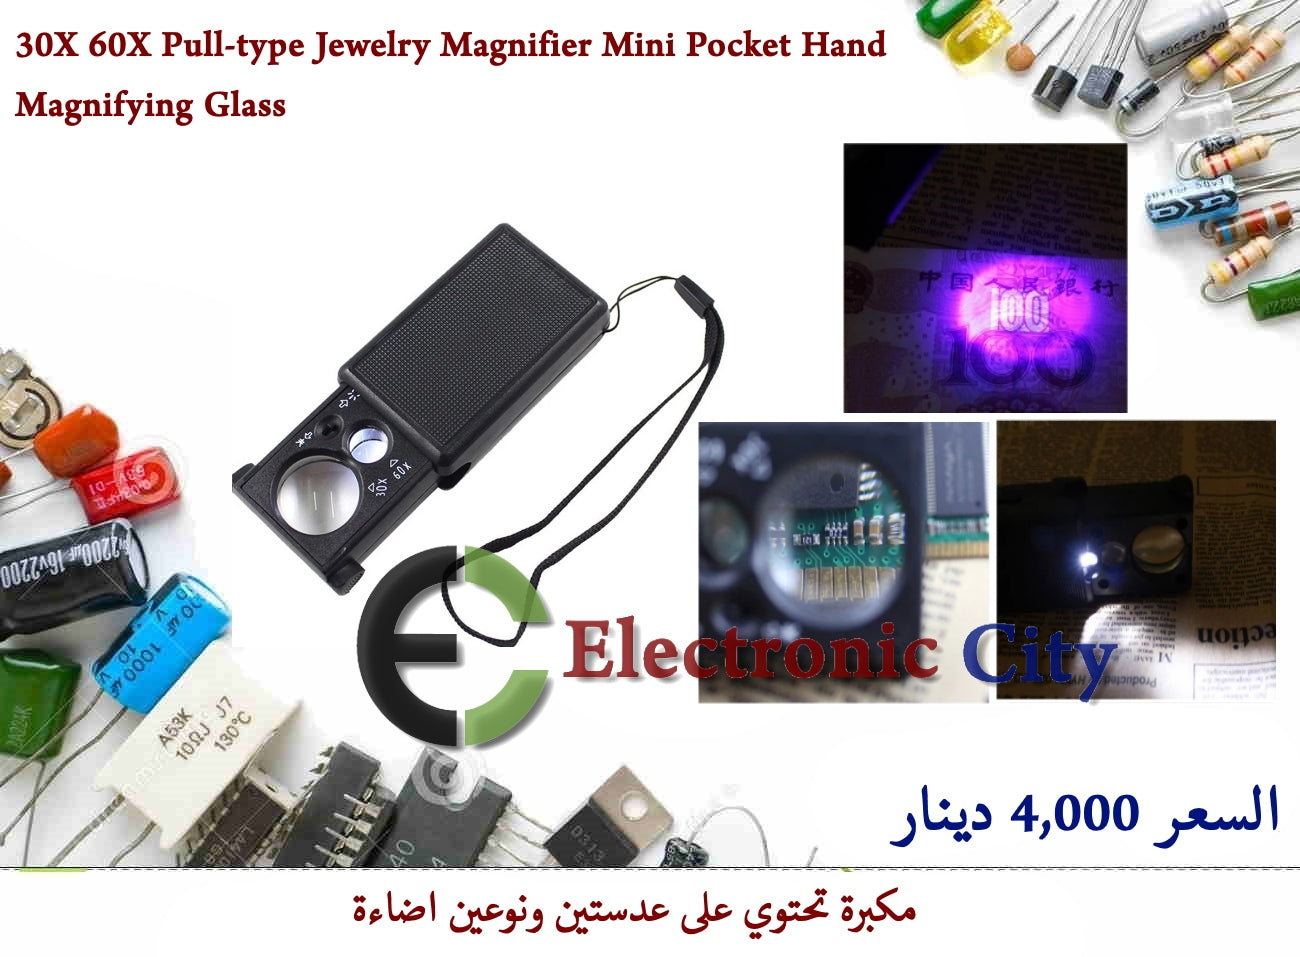 30X 60X Pull-type Jewelry Magnifier Mini Pocket Hand Magnifying Glass #C8  X-JL0017A